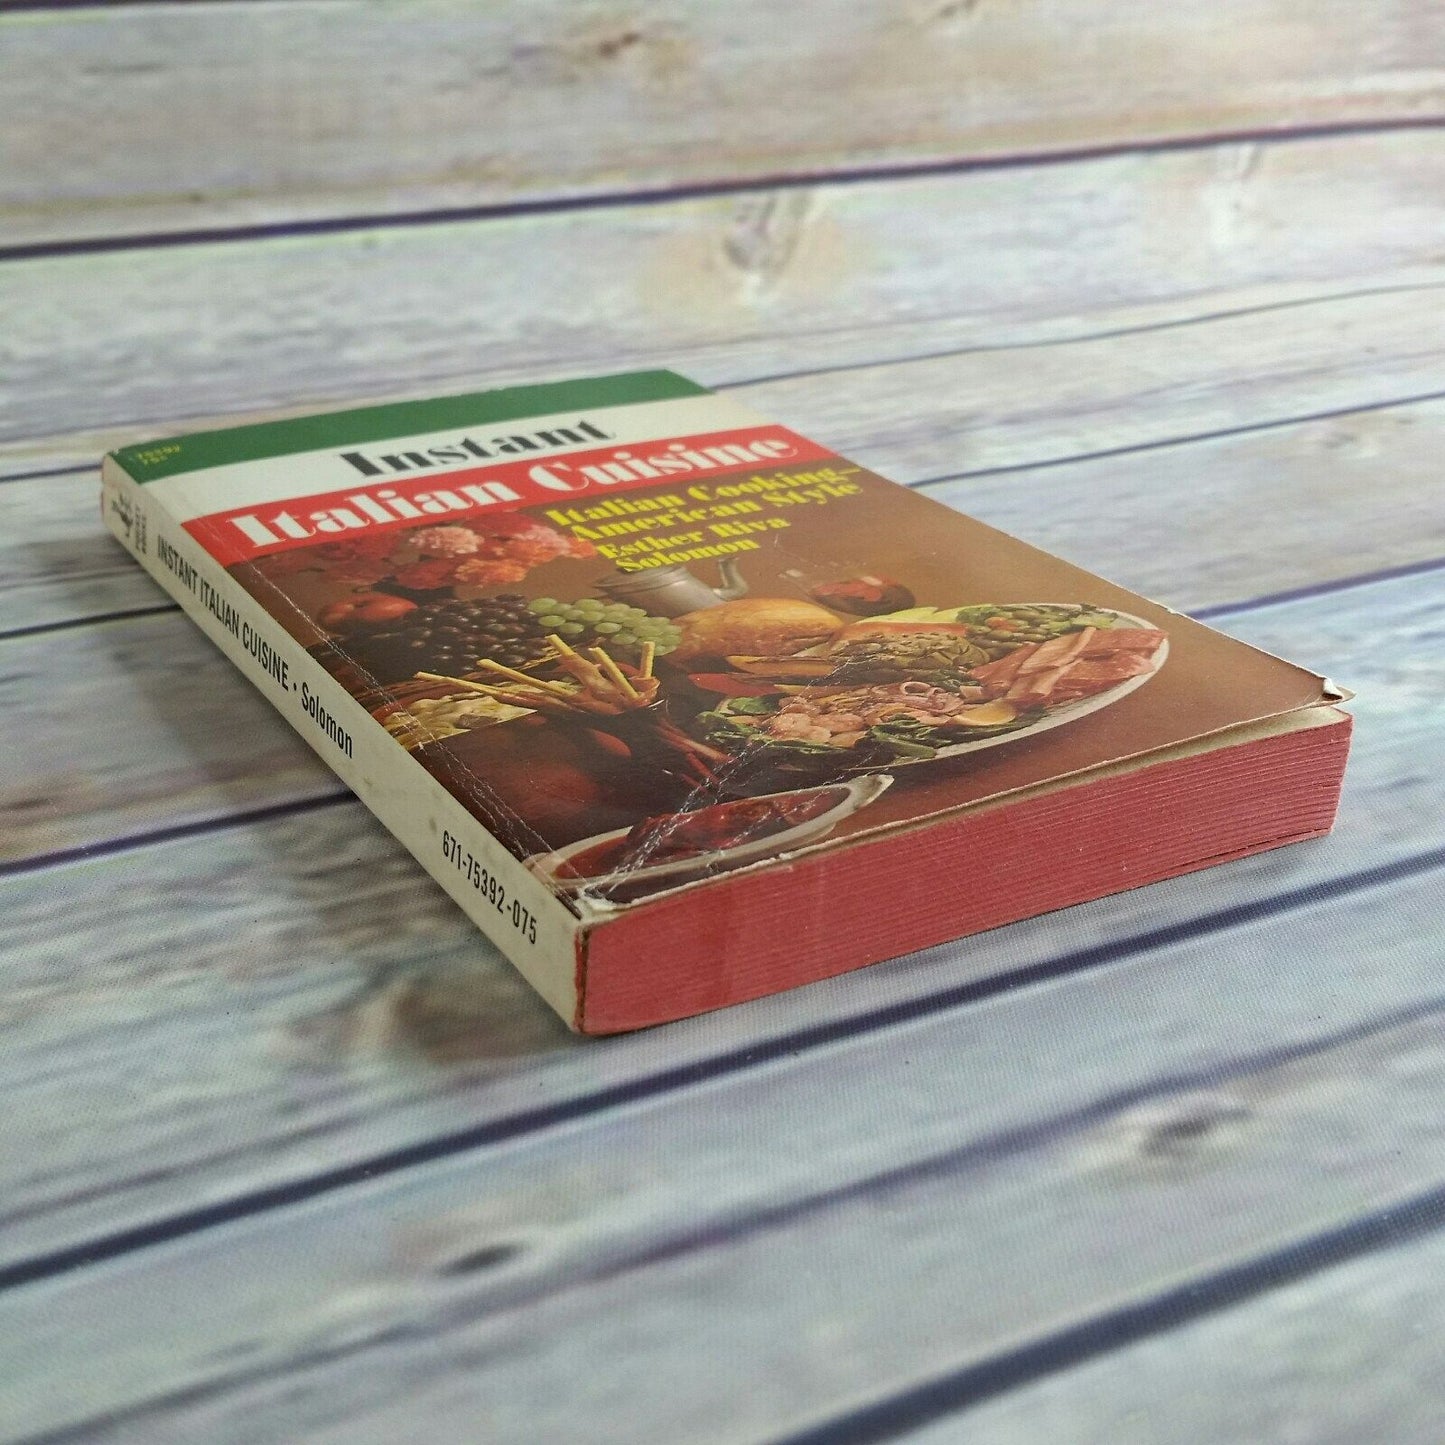 Vintage Italian Cookbook Instant Italian Cuisine American Style 1969 Paperback Recipes Esther Riva Solomon